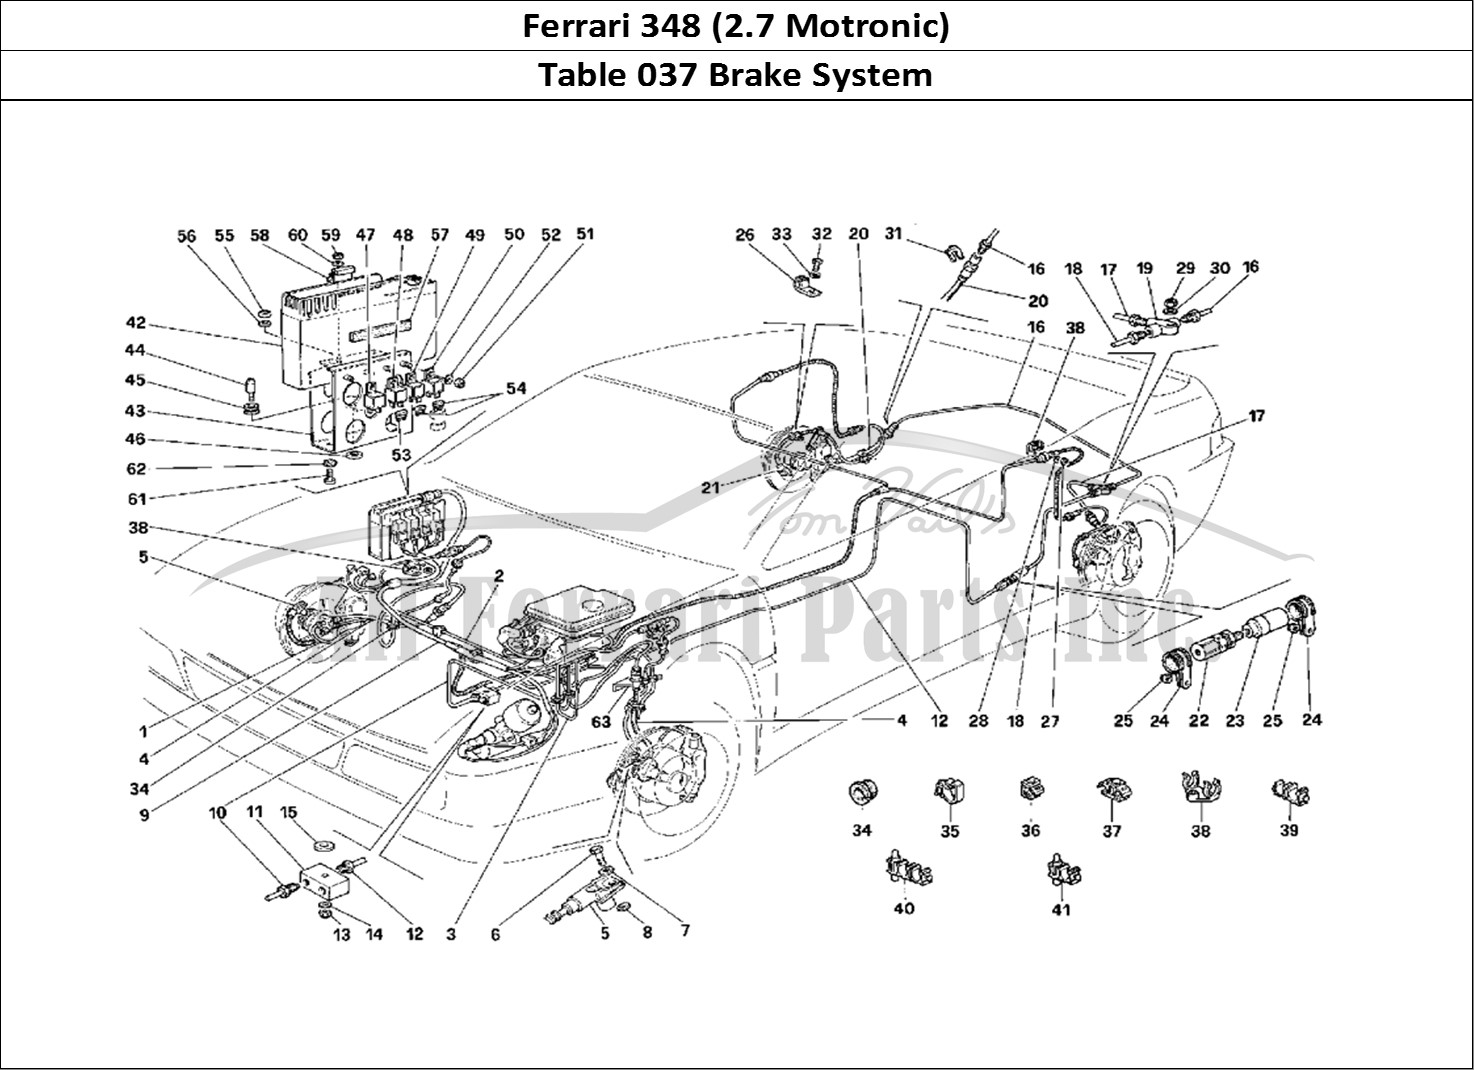 Ferrari Parts Ferrari 348 (2.7 Motronic) Page 037 Brake System